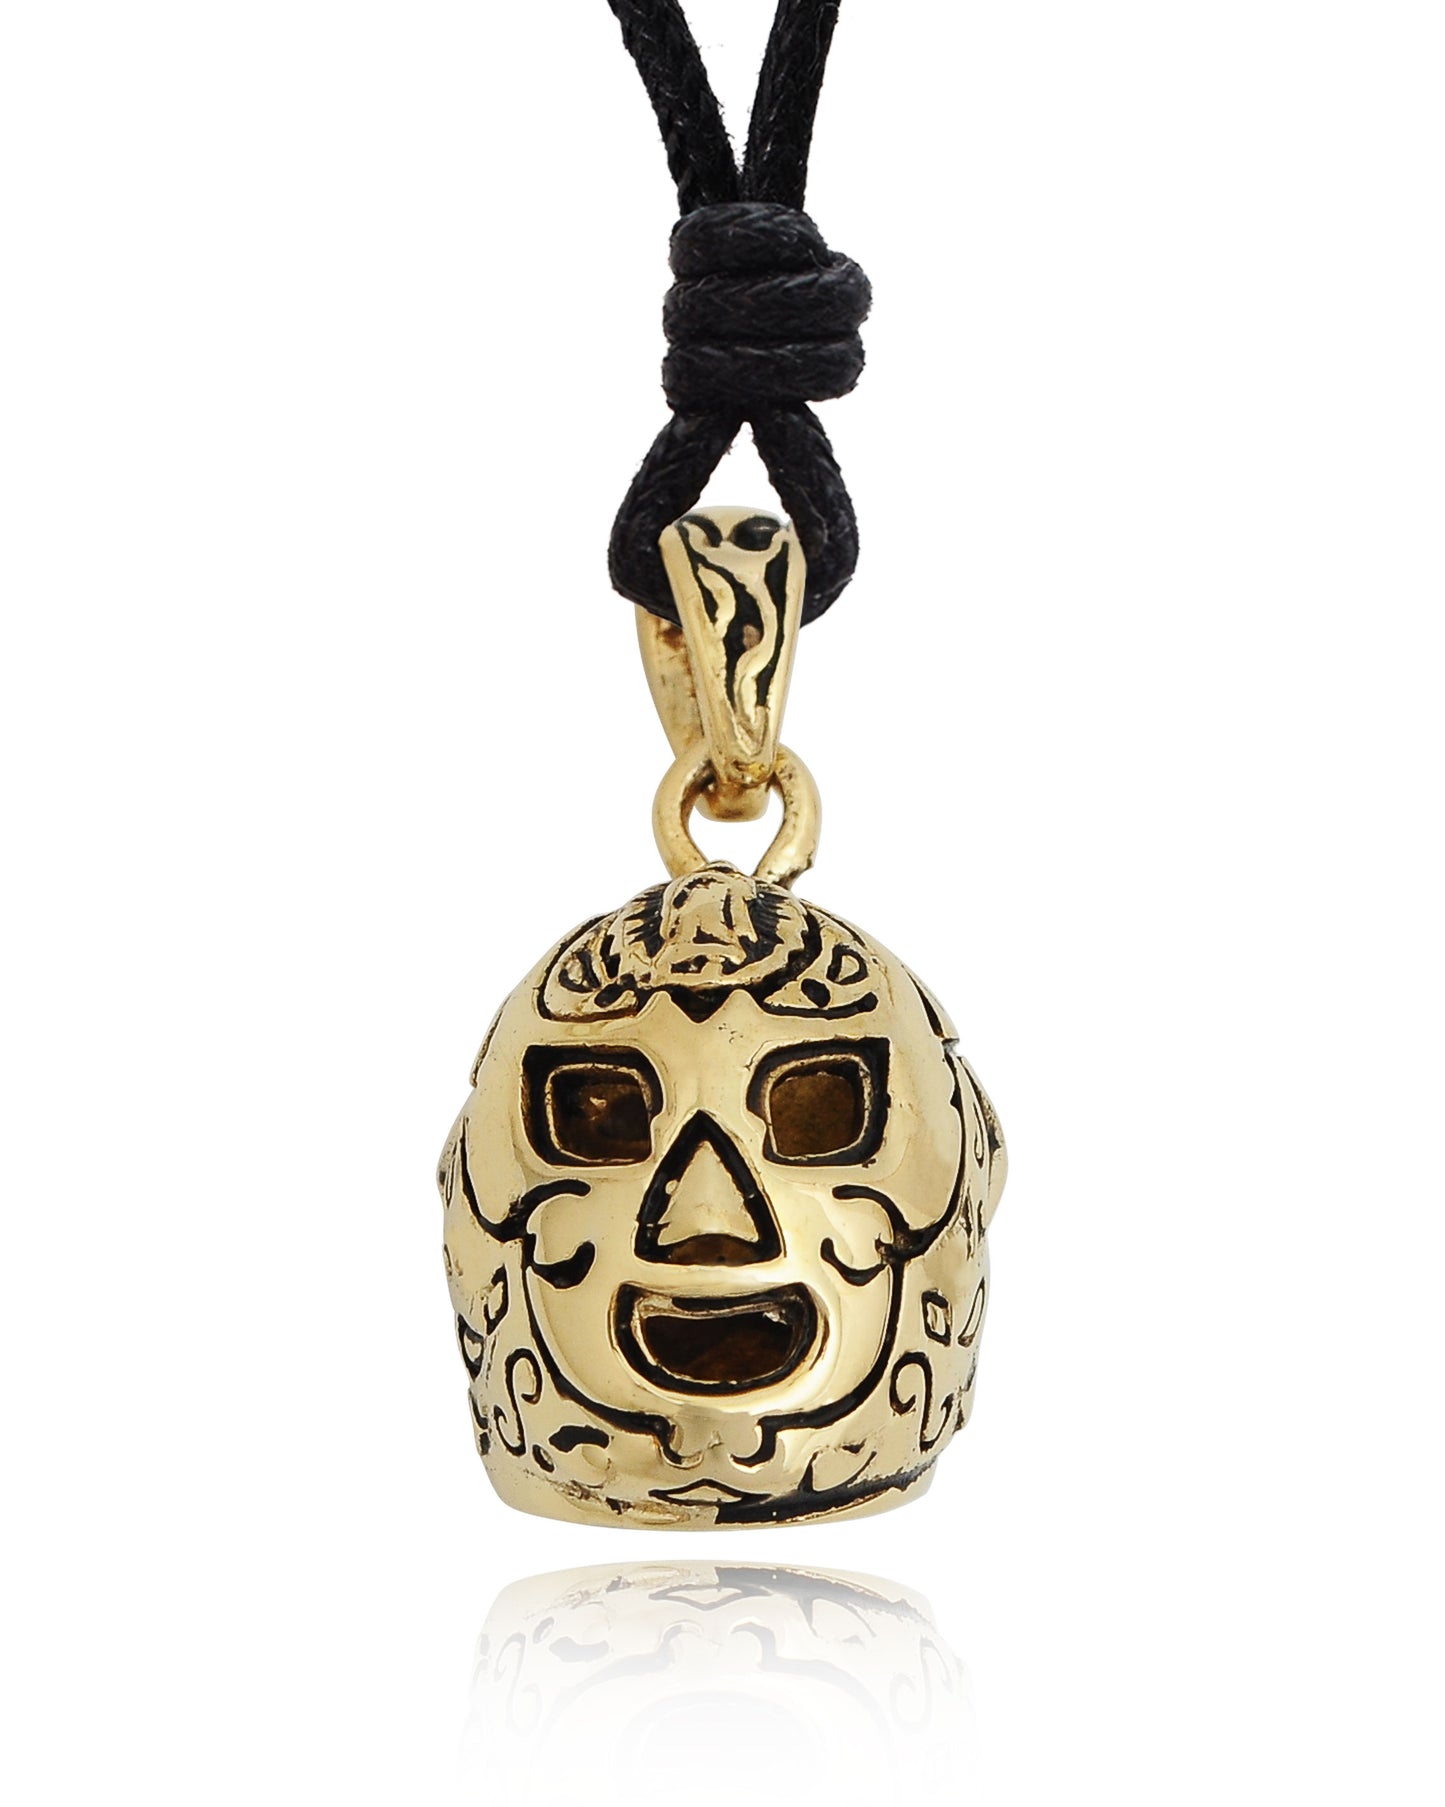 Stylish Handmade Brass Japanese Fox Charm Necklace Pendant Jewelry With Cotton Cord